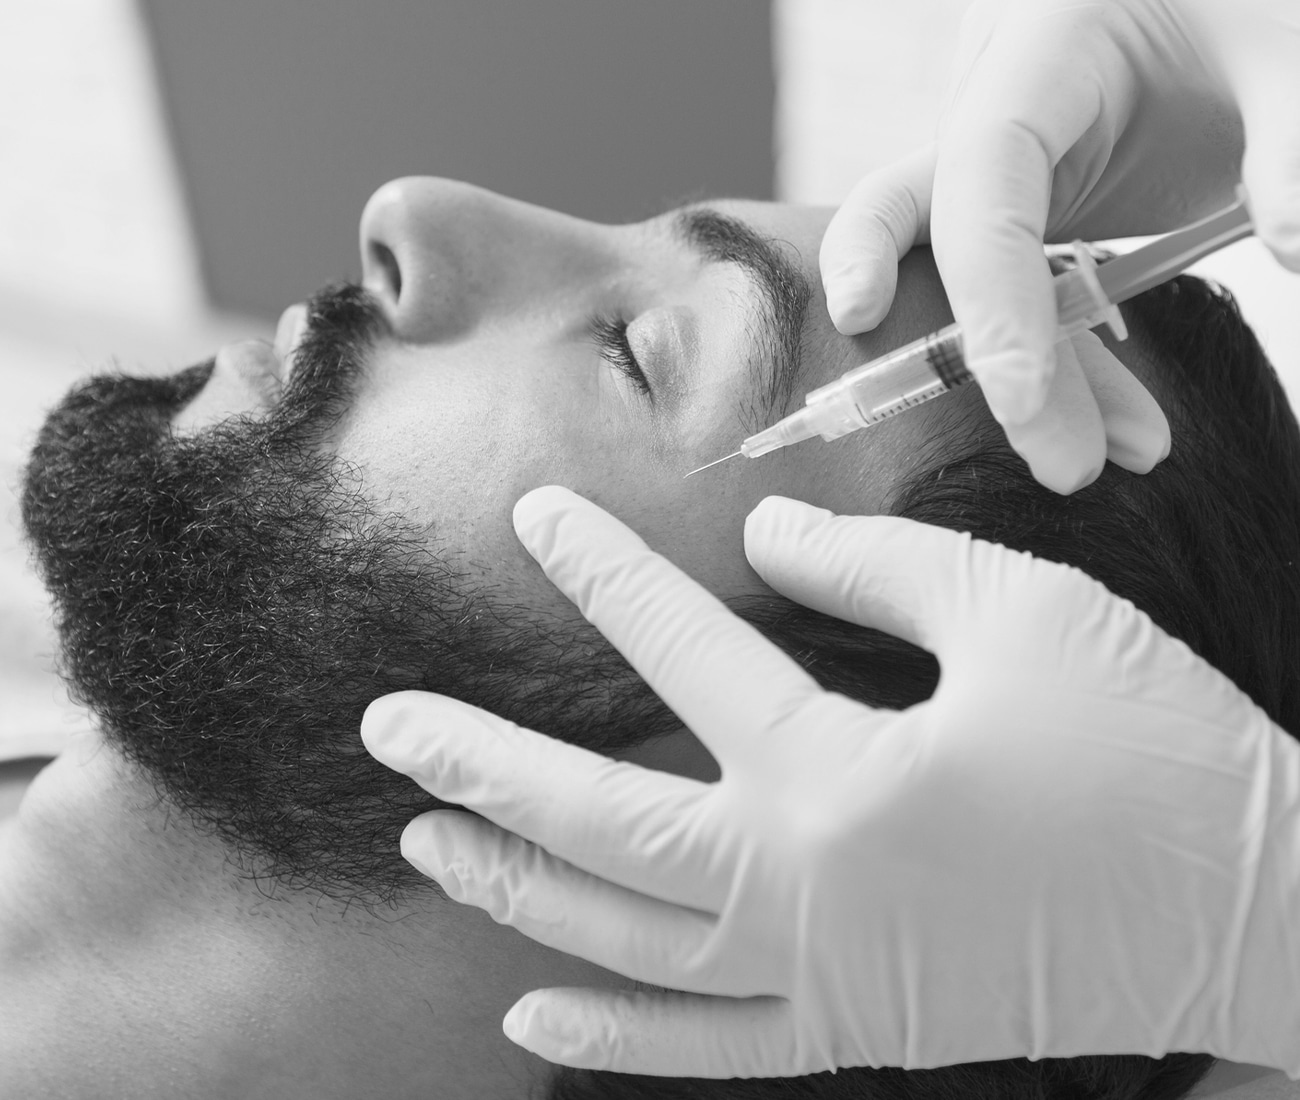 Man With A Beard Getting Botox In His Cheek